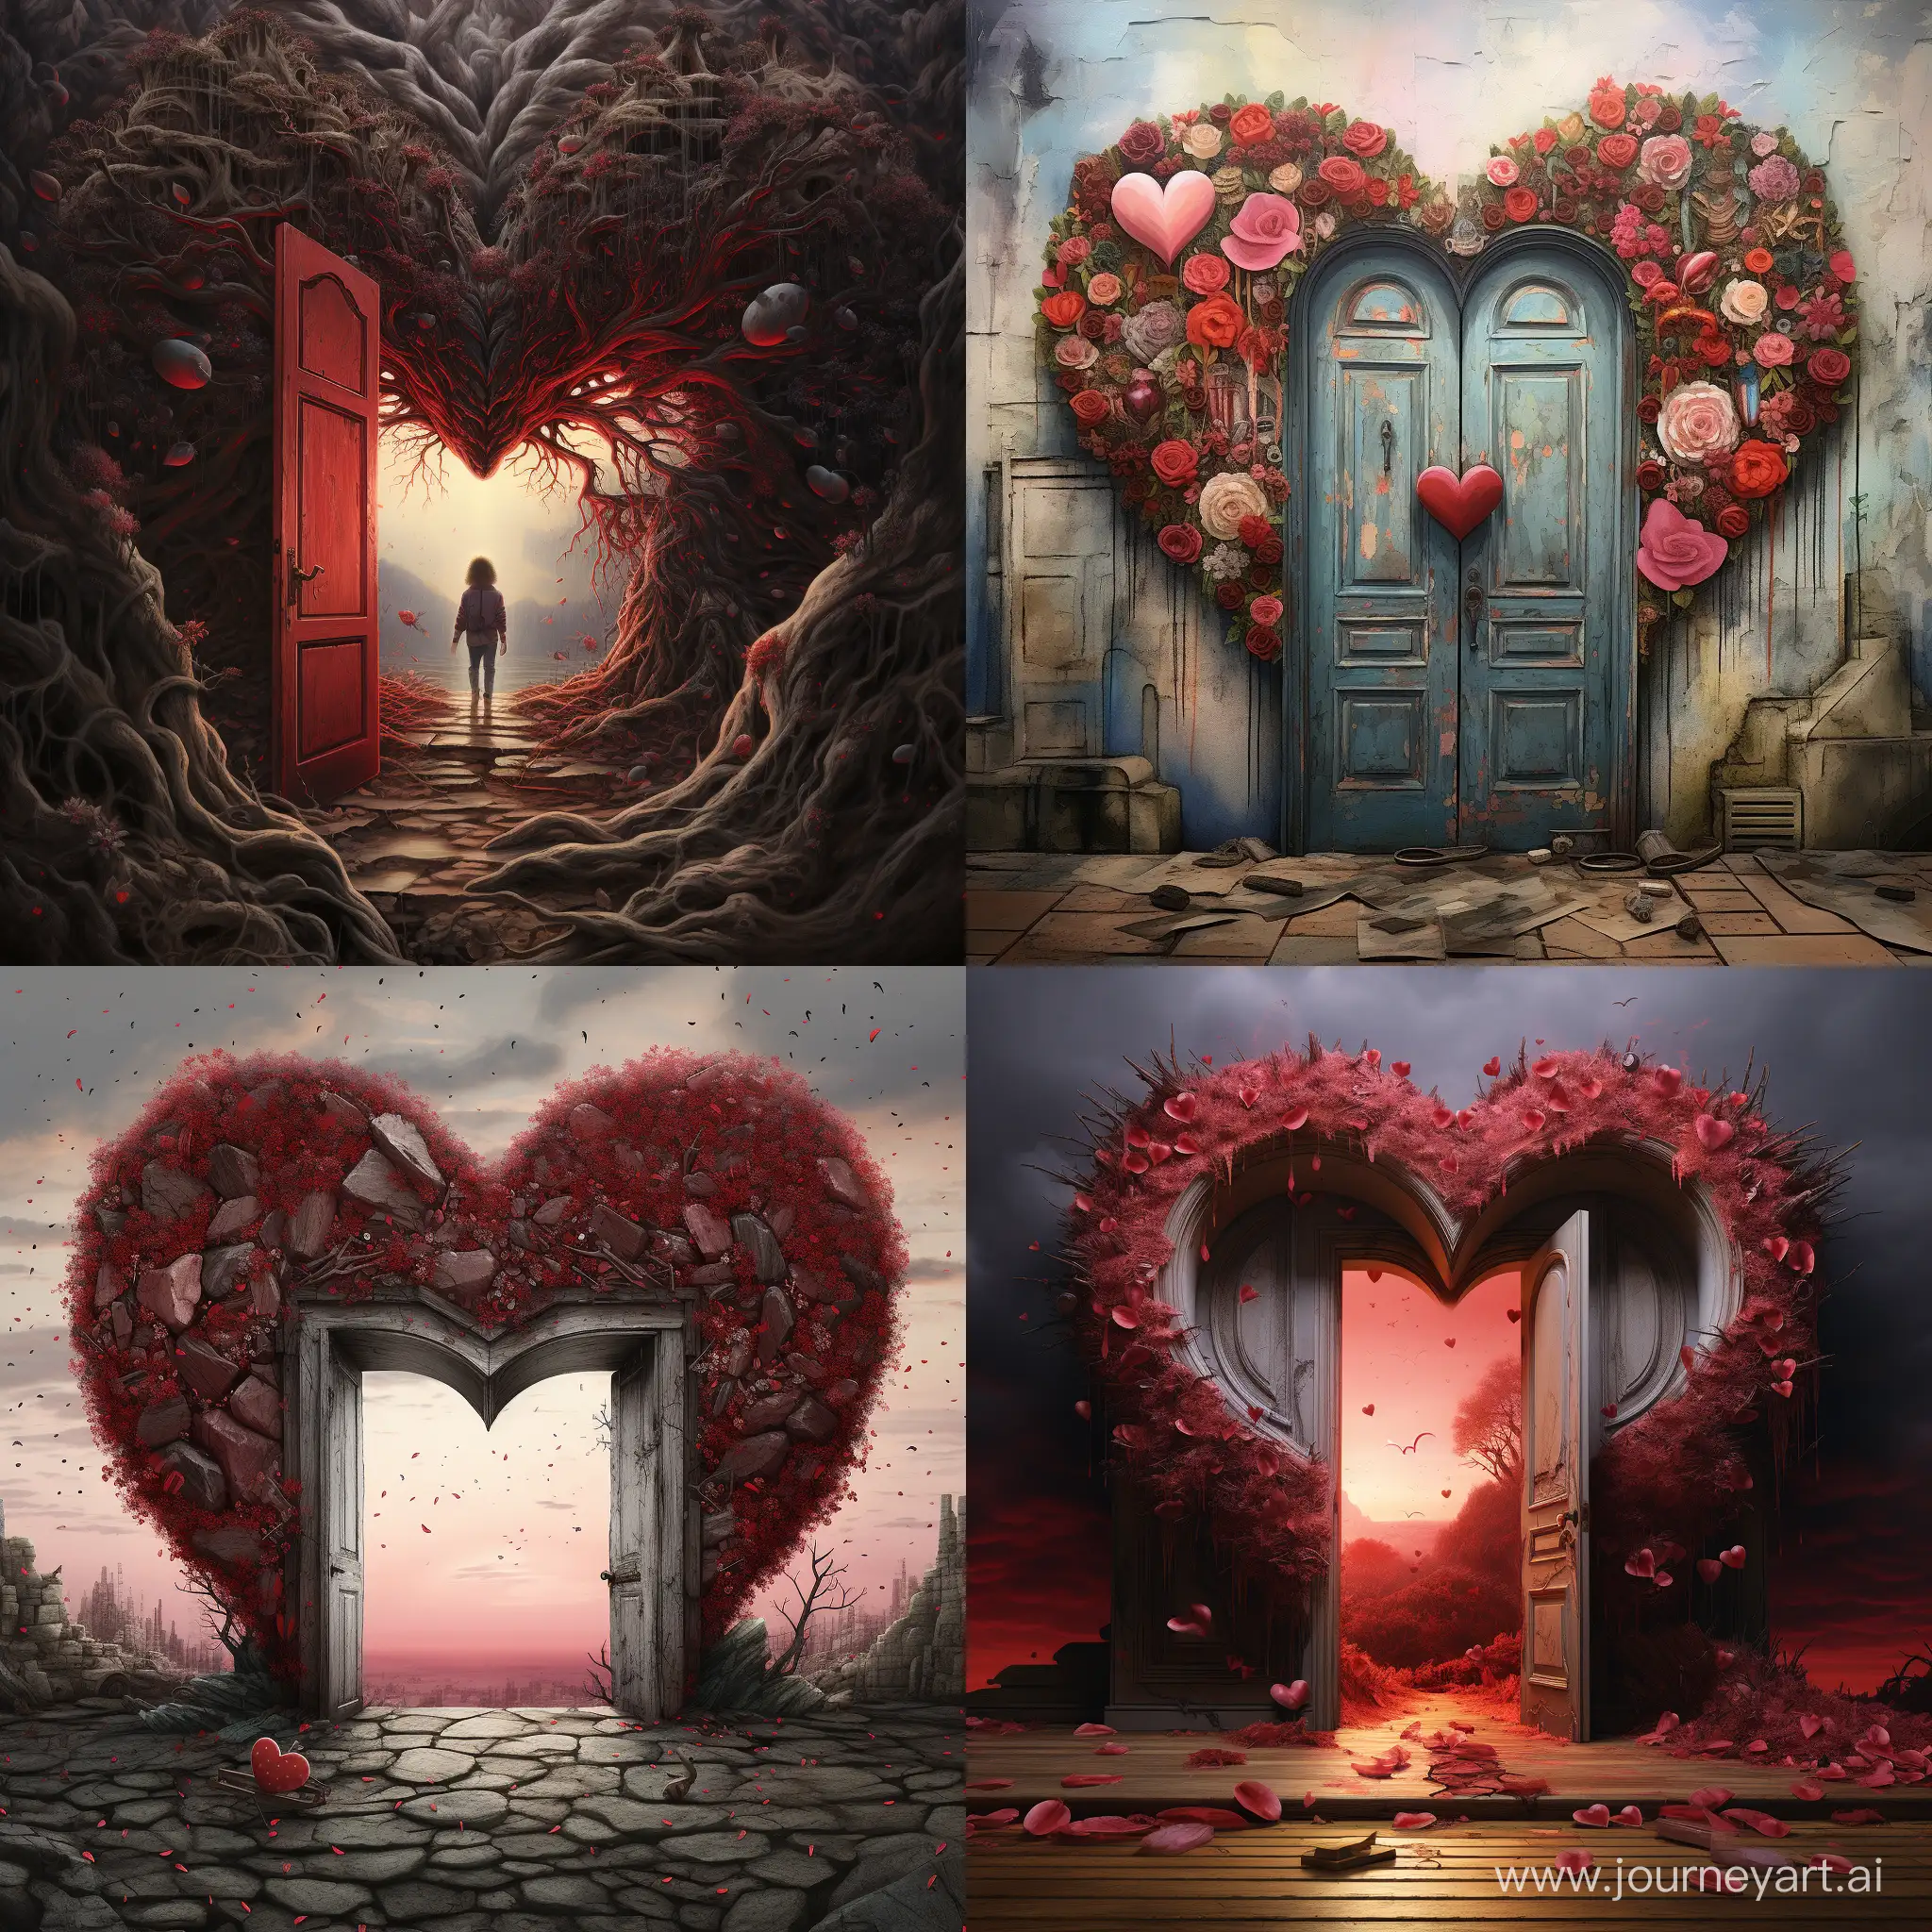 Enchanting-Hearts-Door-Artwork-with-11-Aspect-Ratio